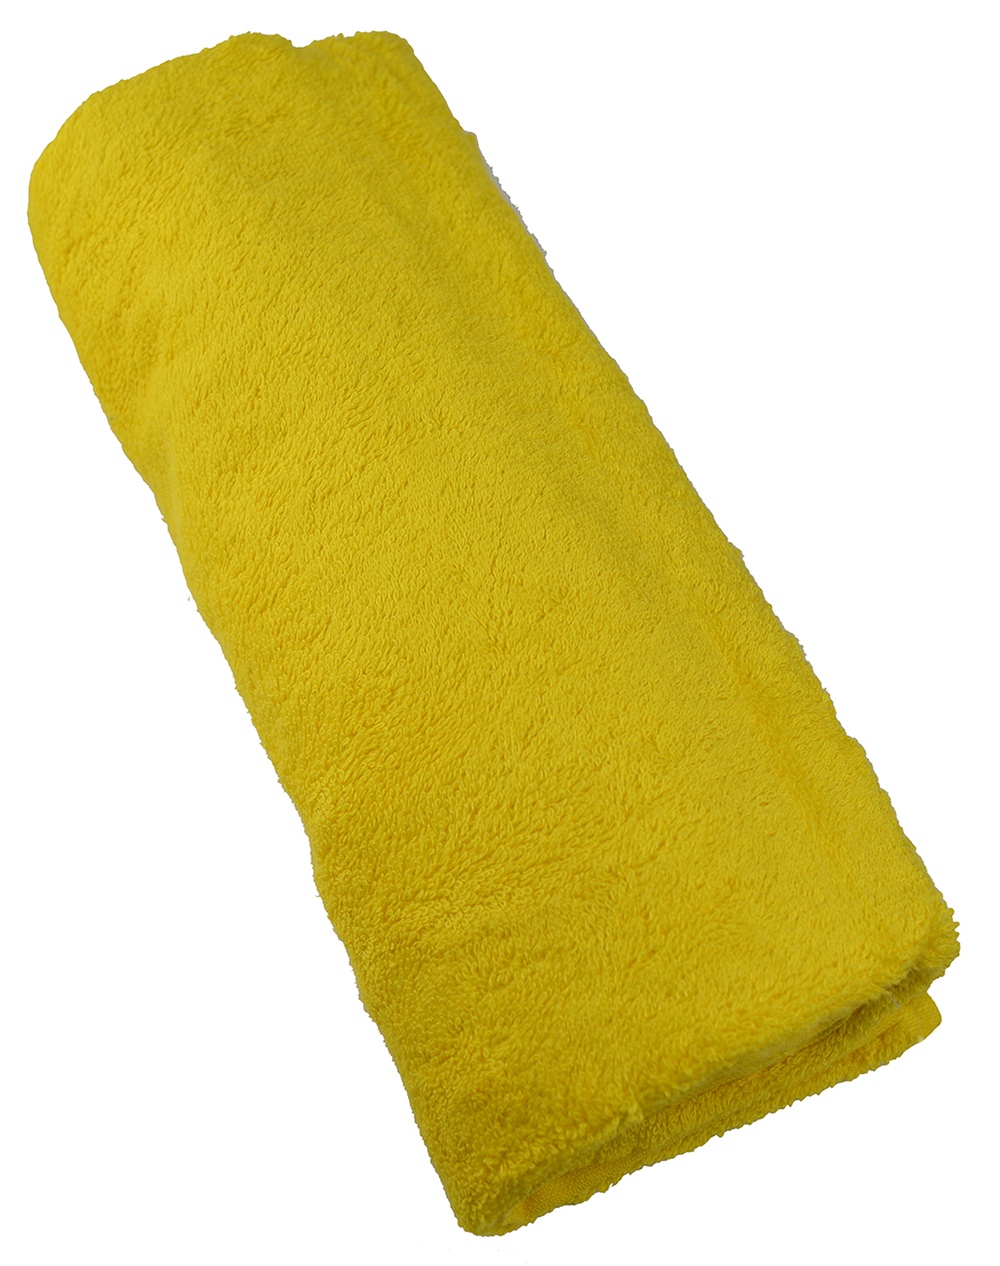 Полотенце махровое SEL Bamboo, цвет: желтый, 100х150 см